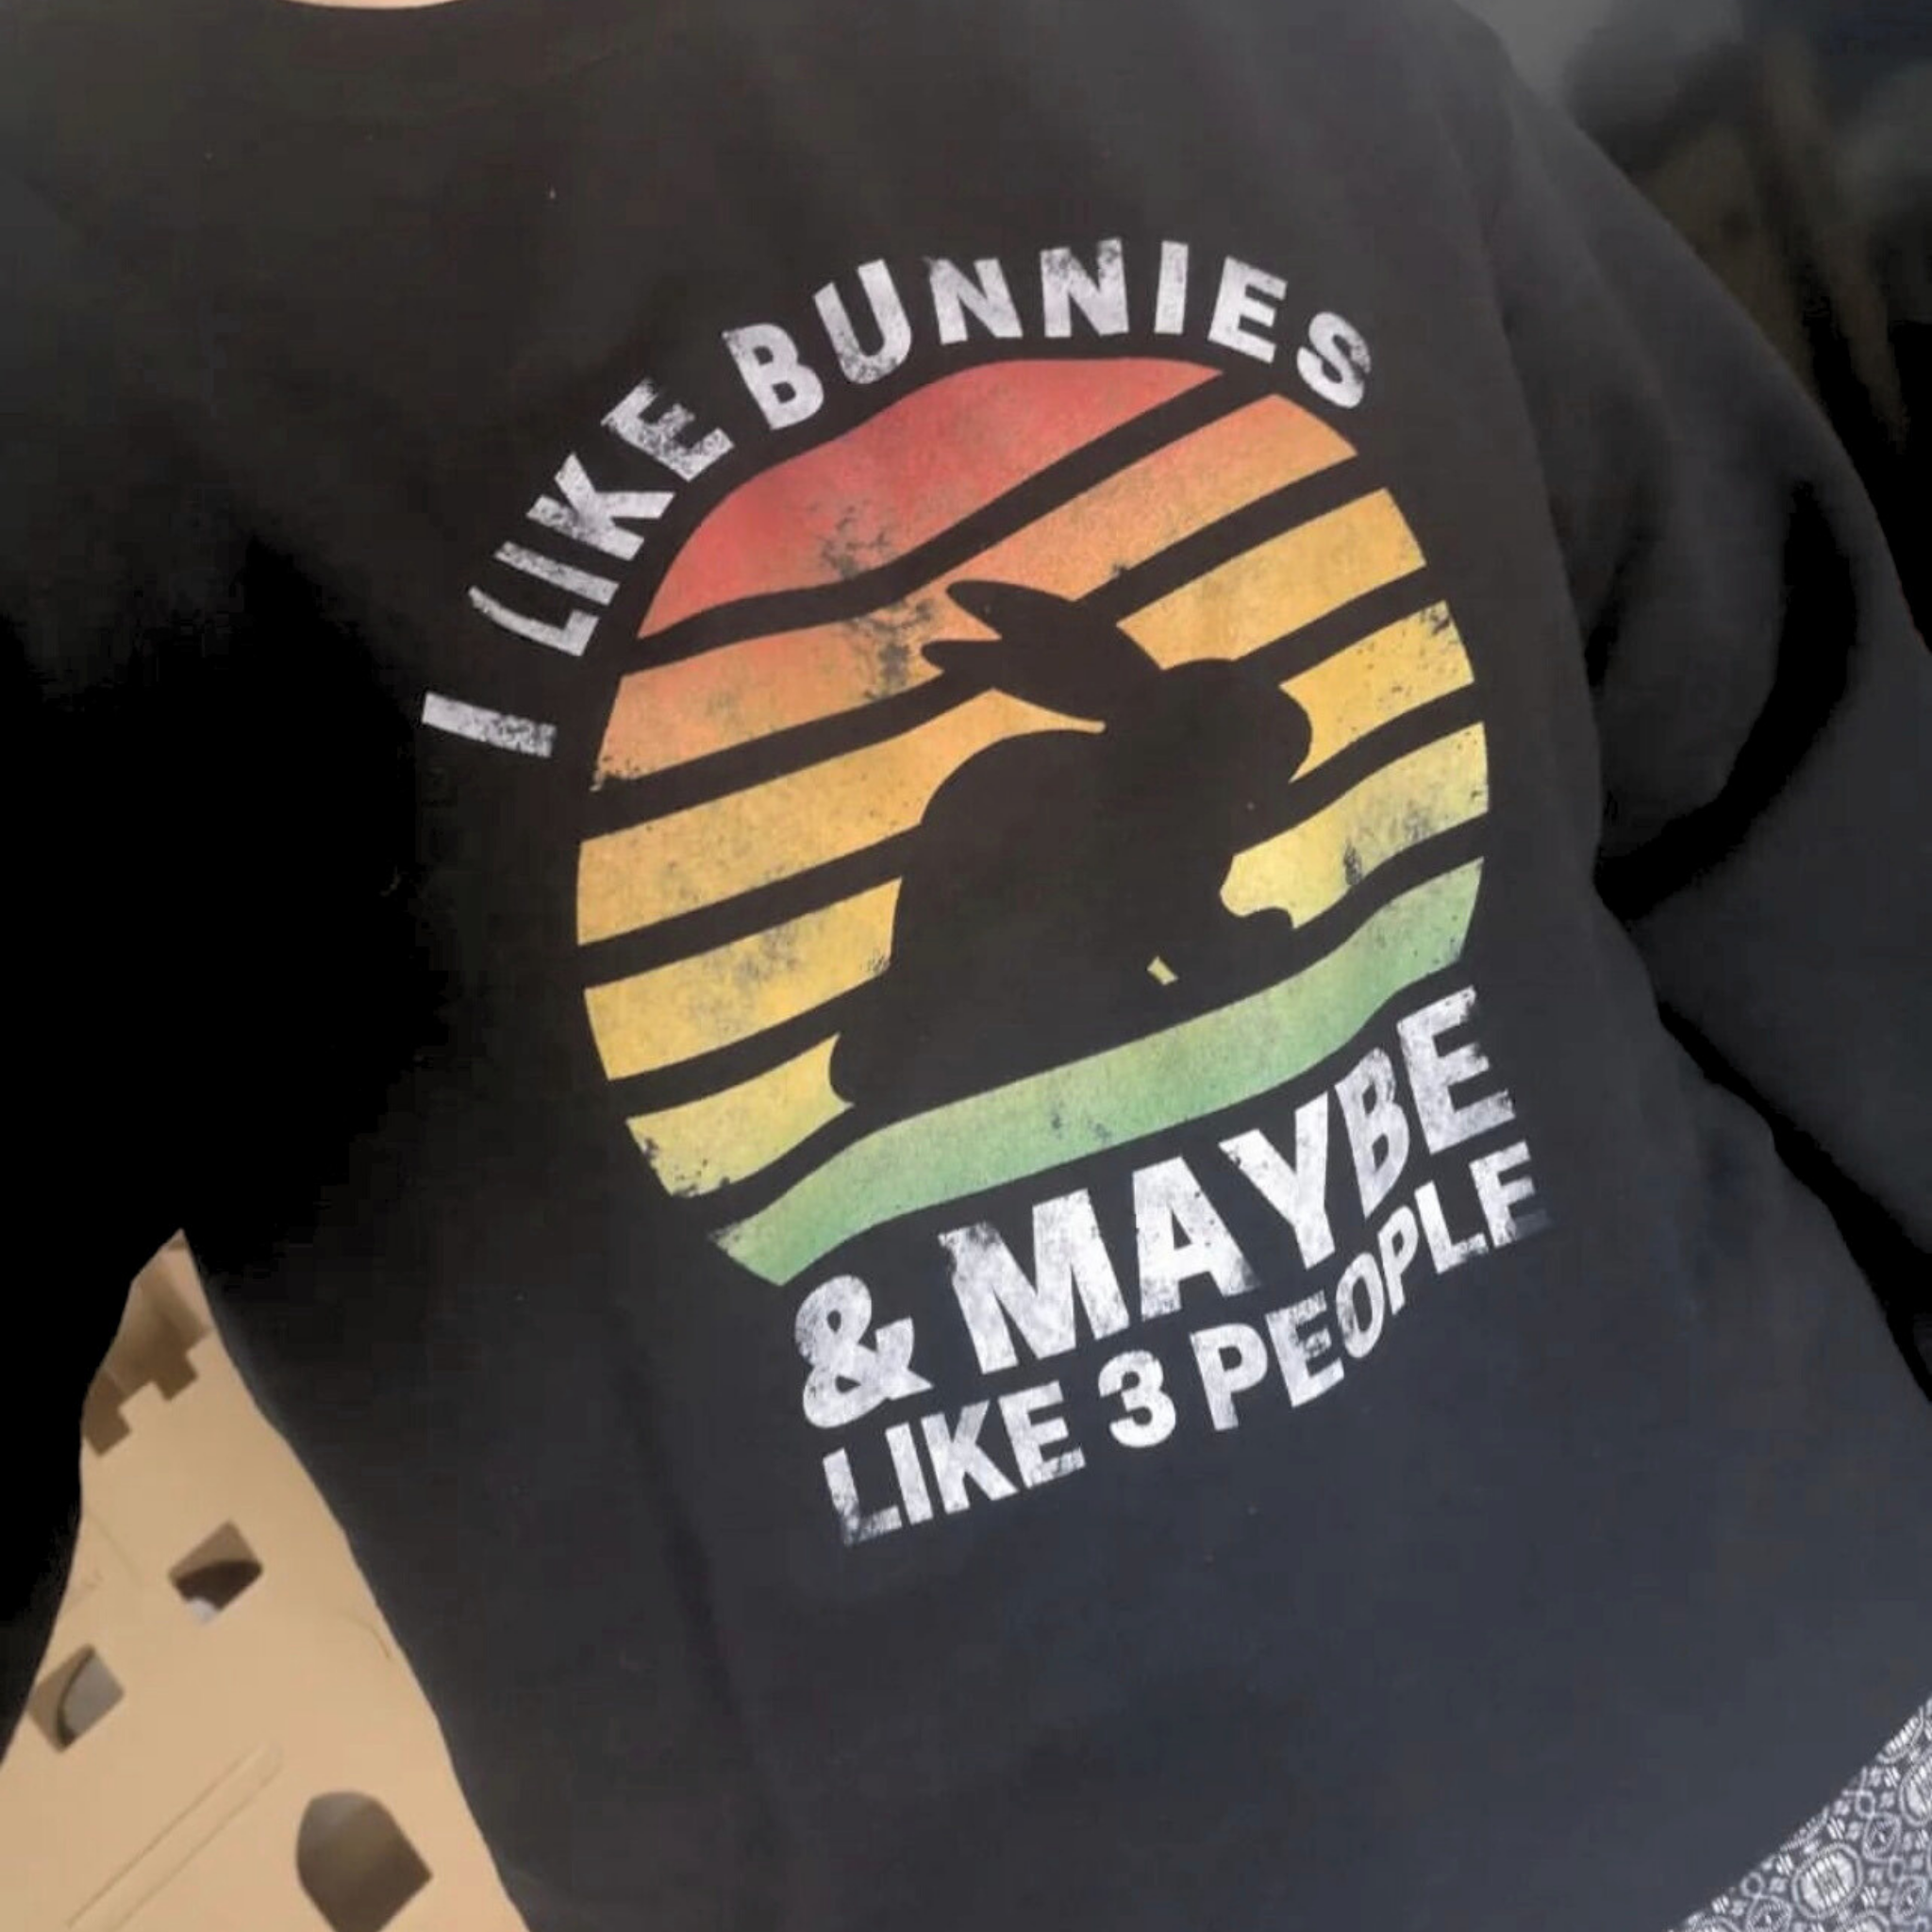 I Like Bunnies and Like 3 People Crewneck Sweatshirt